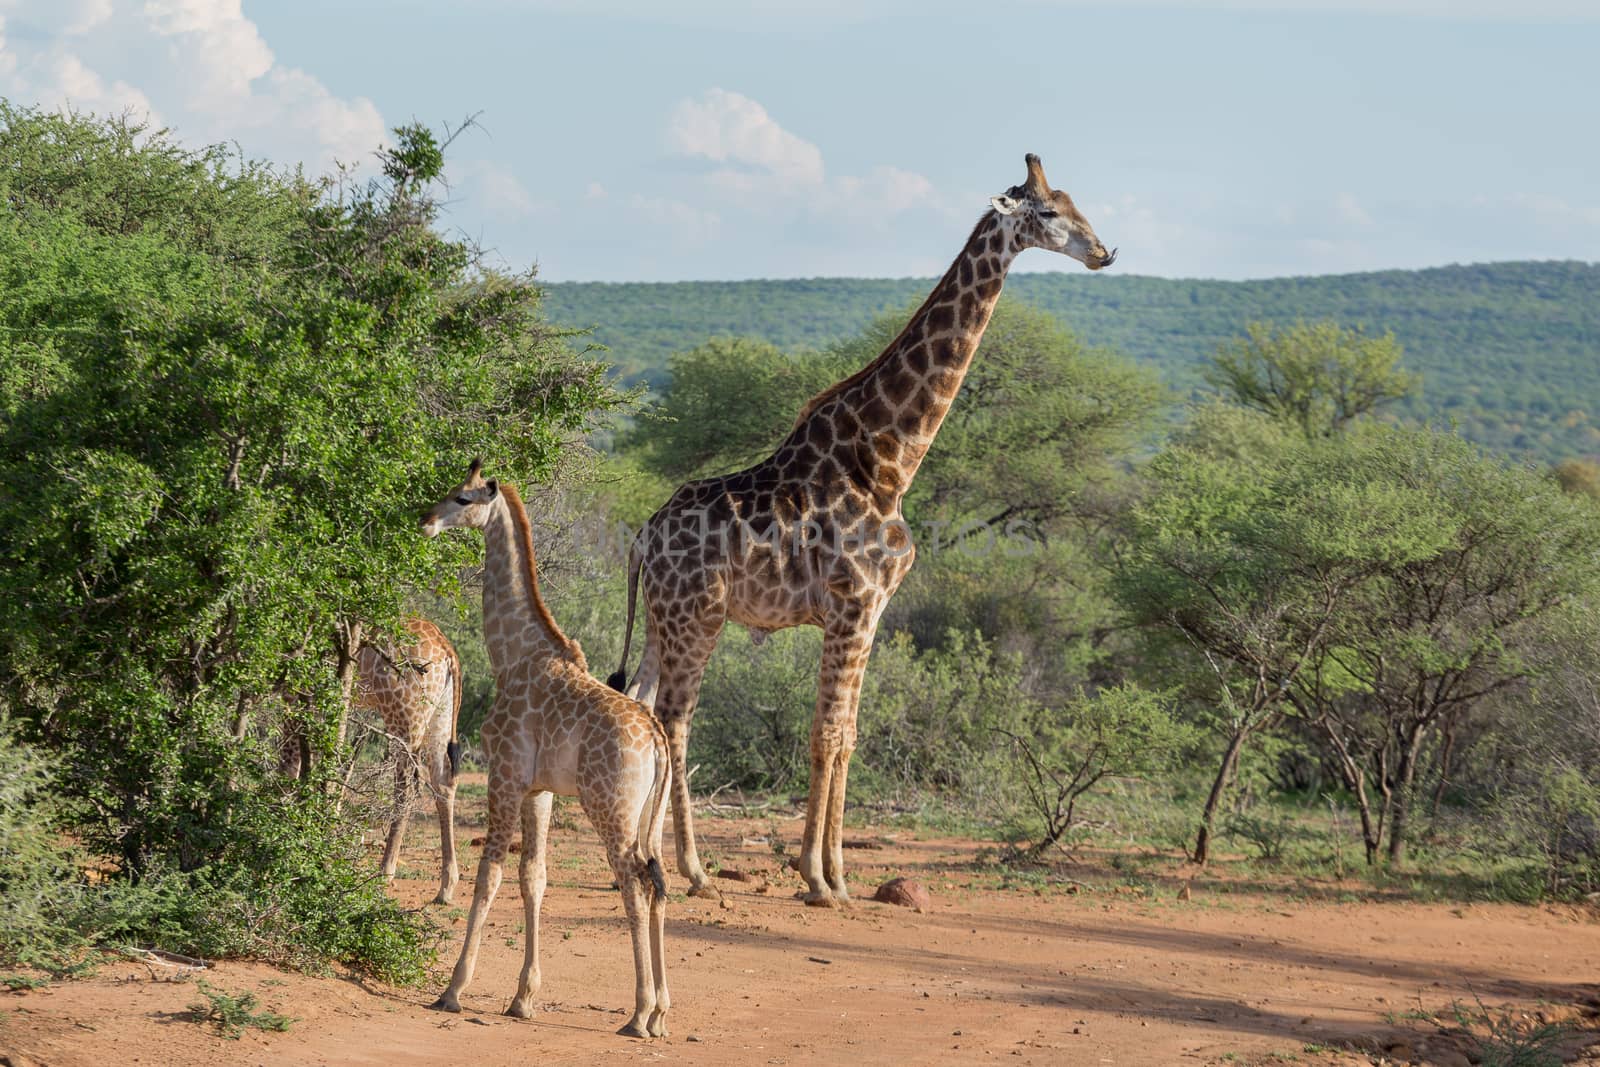 A Giraffe family at the Mokolodi Nature Reserve in Botswana